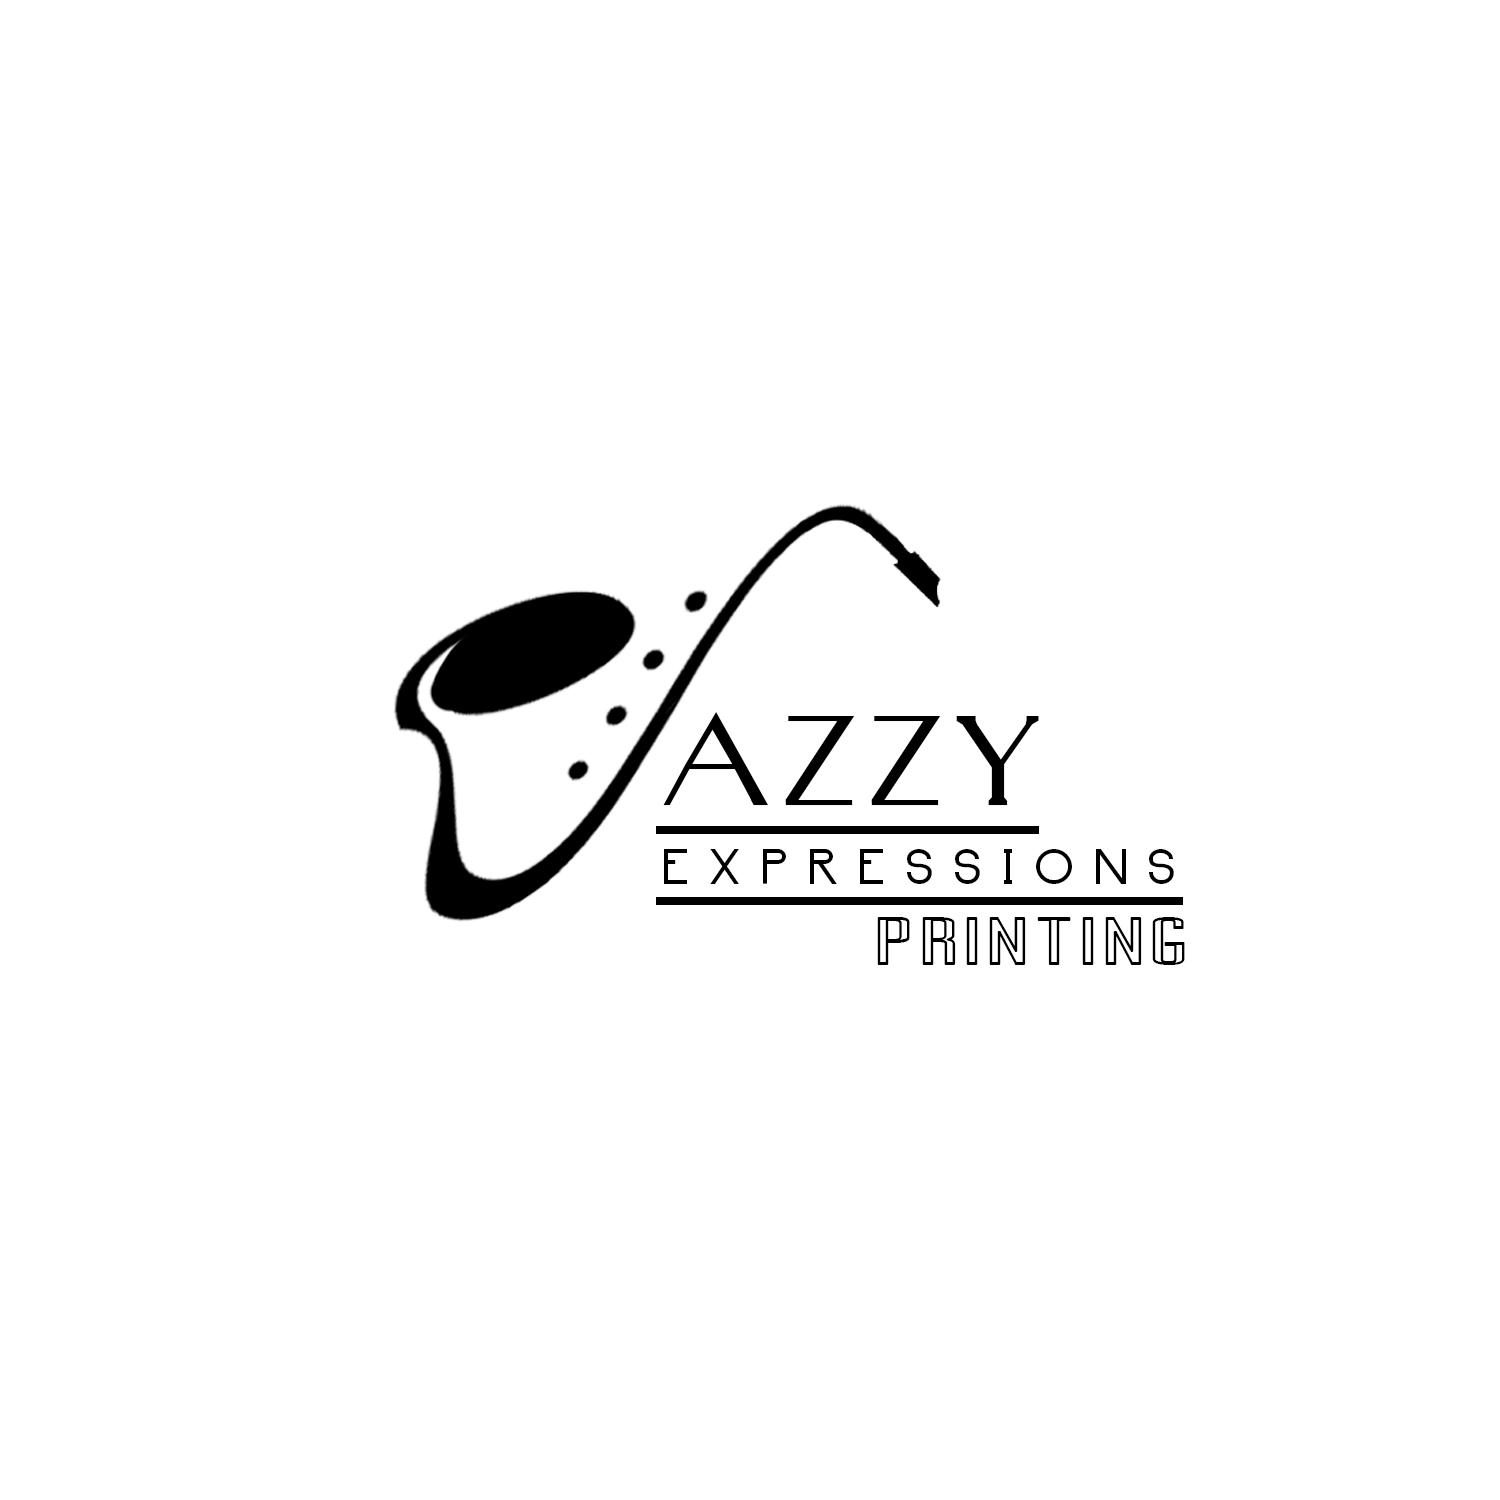 jazzy Expressions printing1.jpg